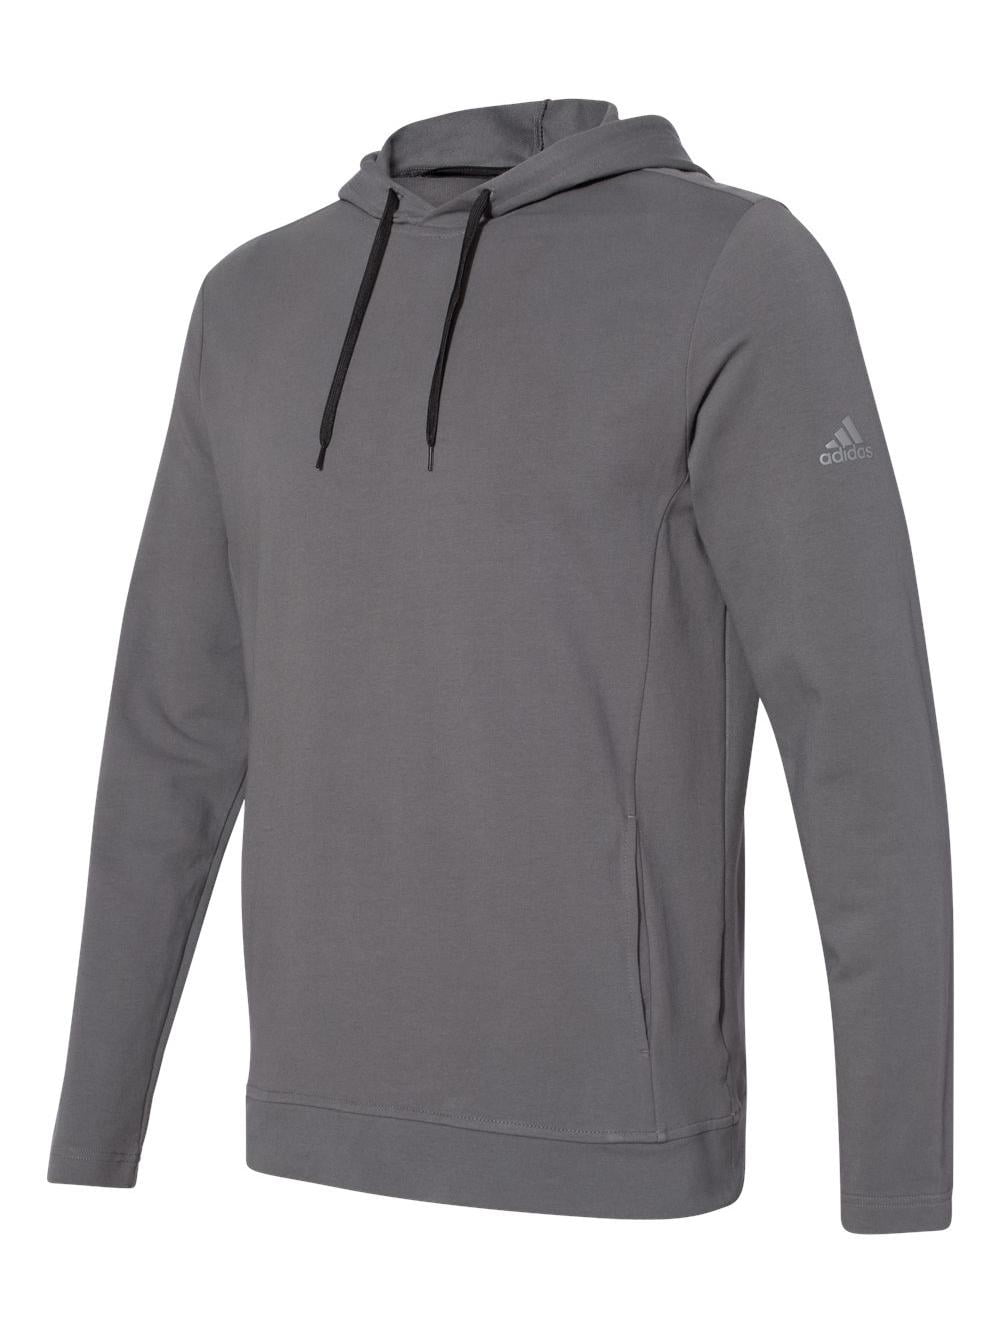 Adidas - Lightweight Hooded Sweatshirt - A450 - Grey Five - Size: 2XL ...